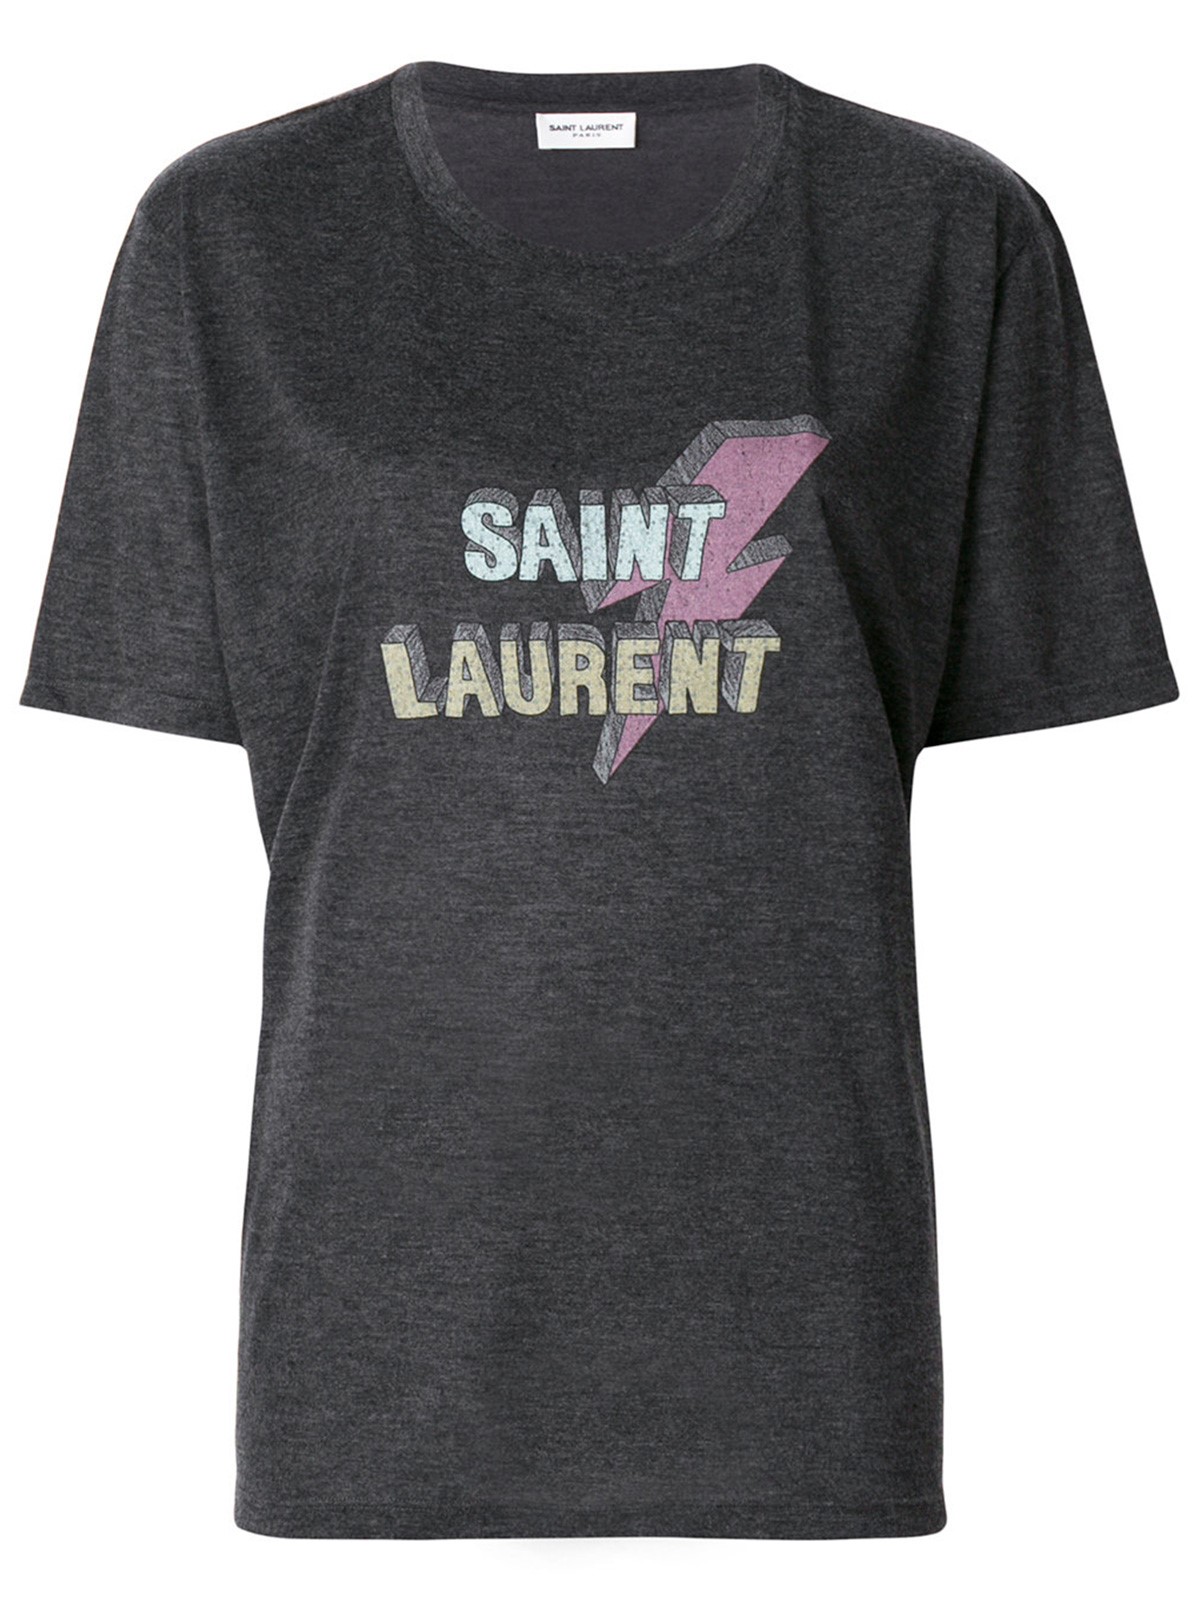 SAINT LAURENT PARIS サンローランパリ LIGHTNING BOLT LOGO T-SHIRT